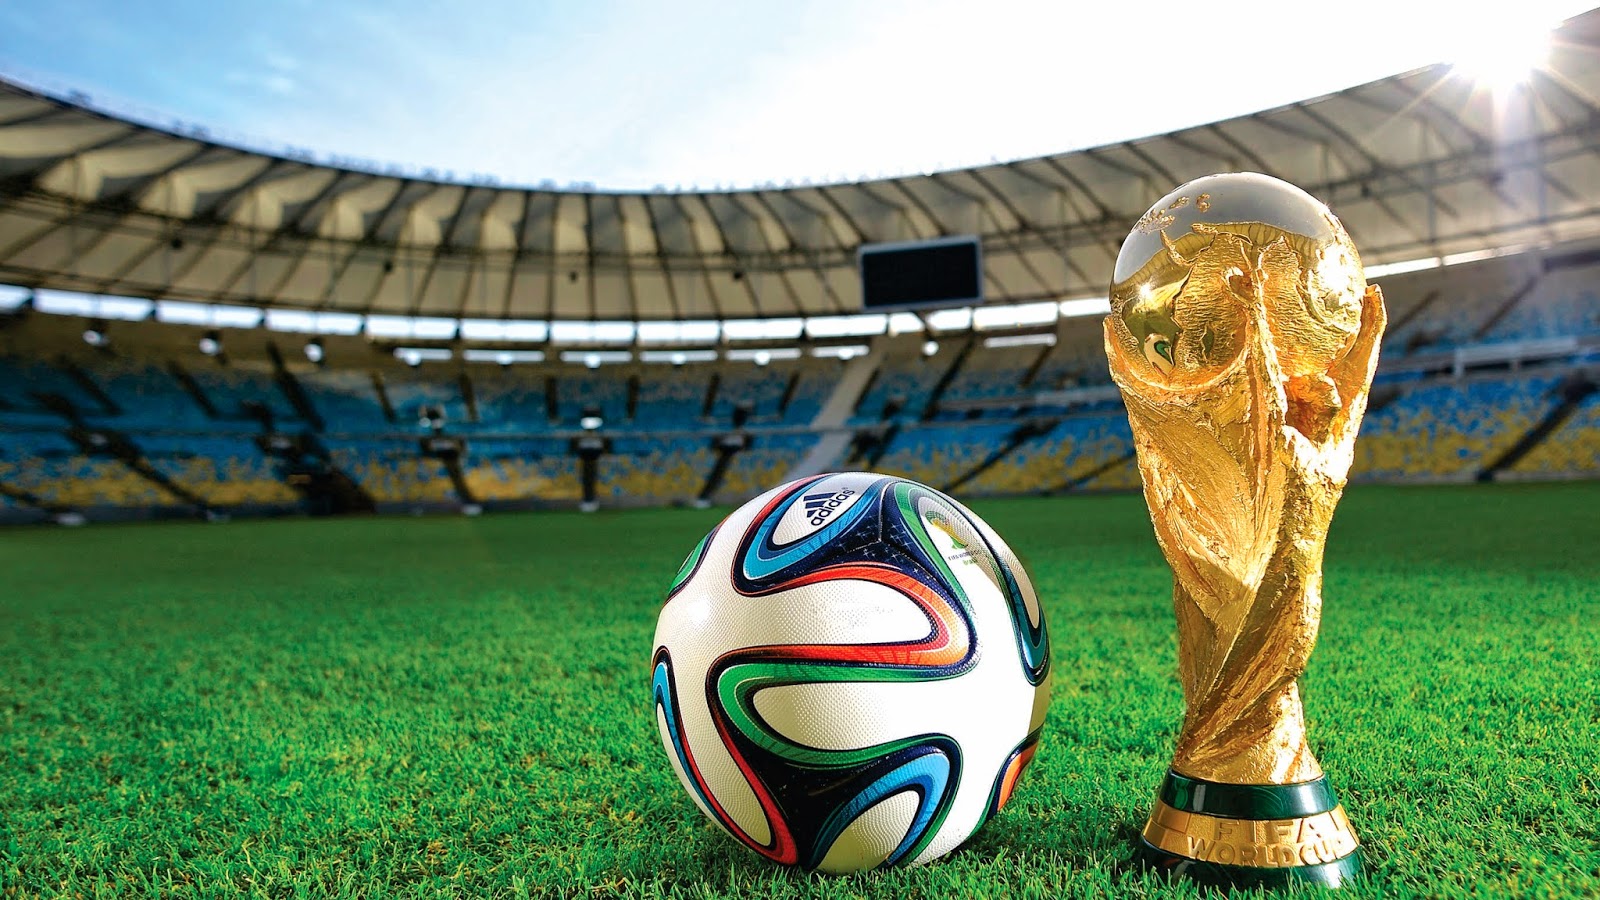 fond d'écran coupe du monde de la fifa,ballon de football,football,herbe,joueur,stade